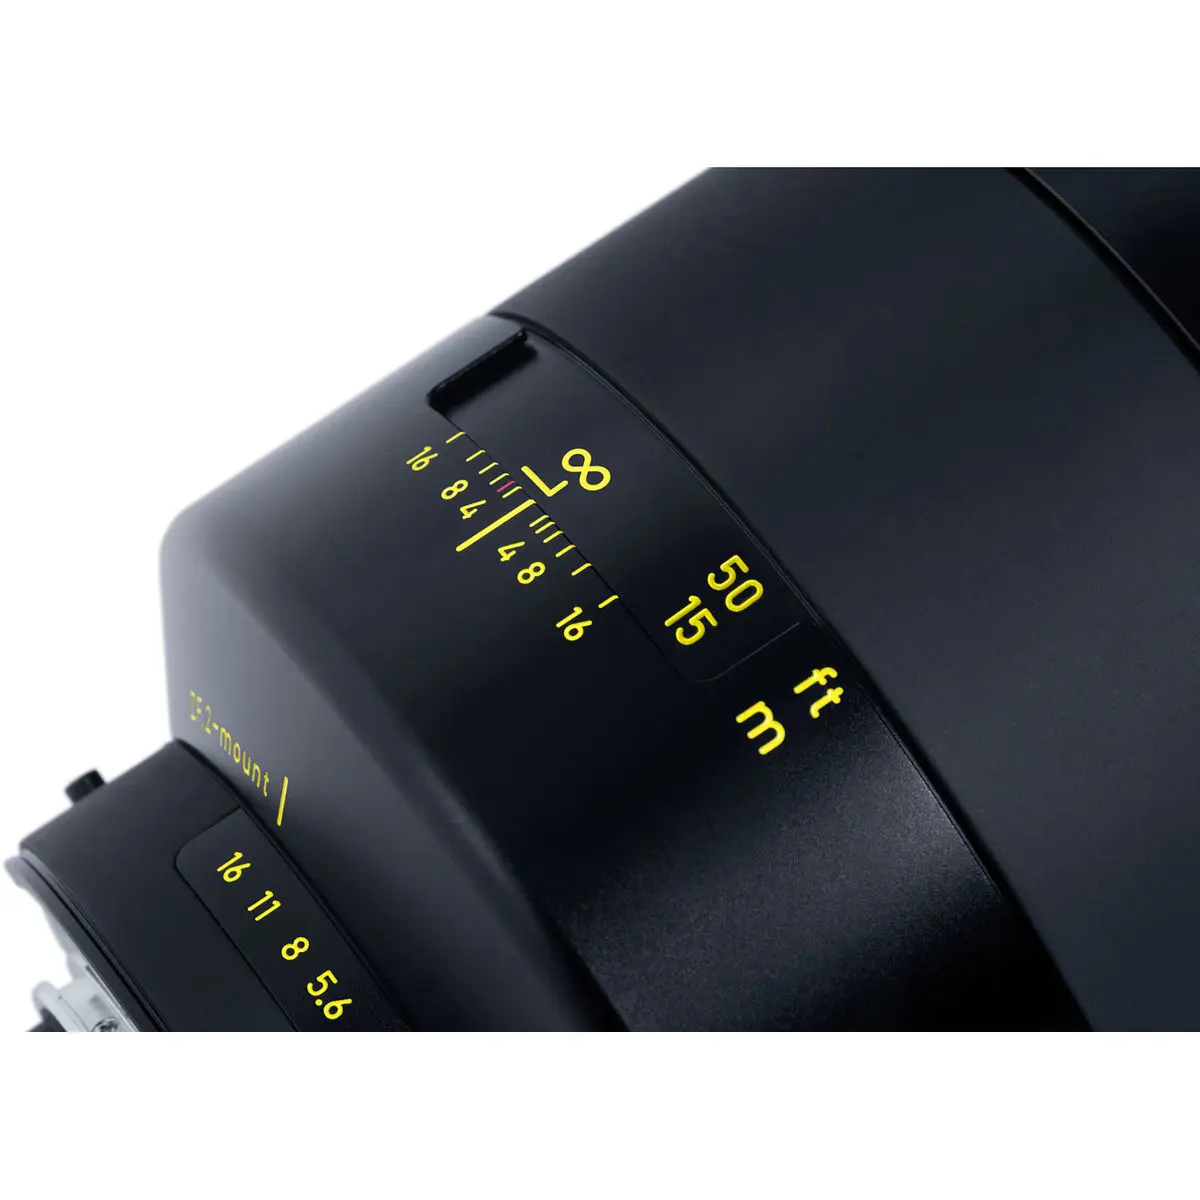 13. Carl Zeiss Otus 1.4/100 ZF.2 (Nikon) Lens